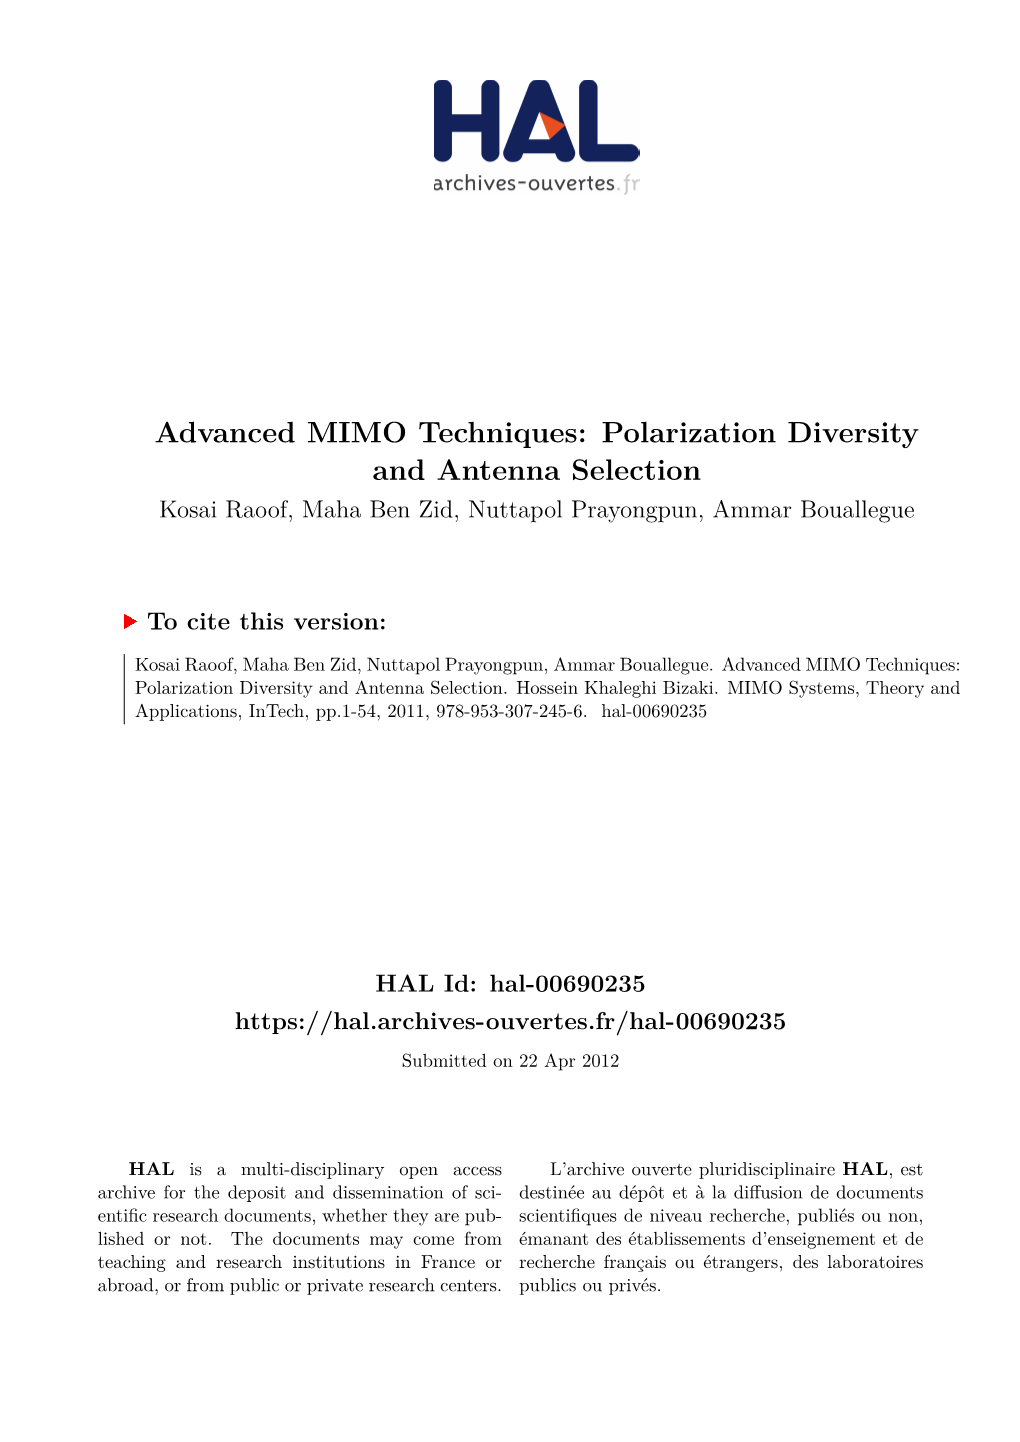 Advanced MIMO Techniques: Polarization Diversity and Antenna Selection Kosai Raoof, Maha Ben Zid, Nuttapol Prayongpun, Ammar Bouallegue